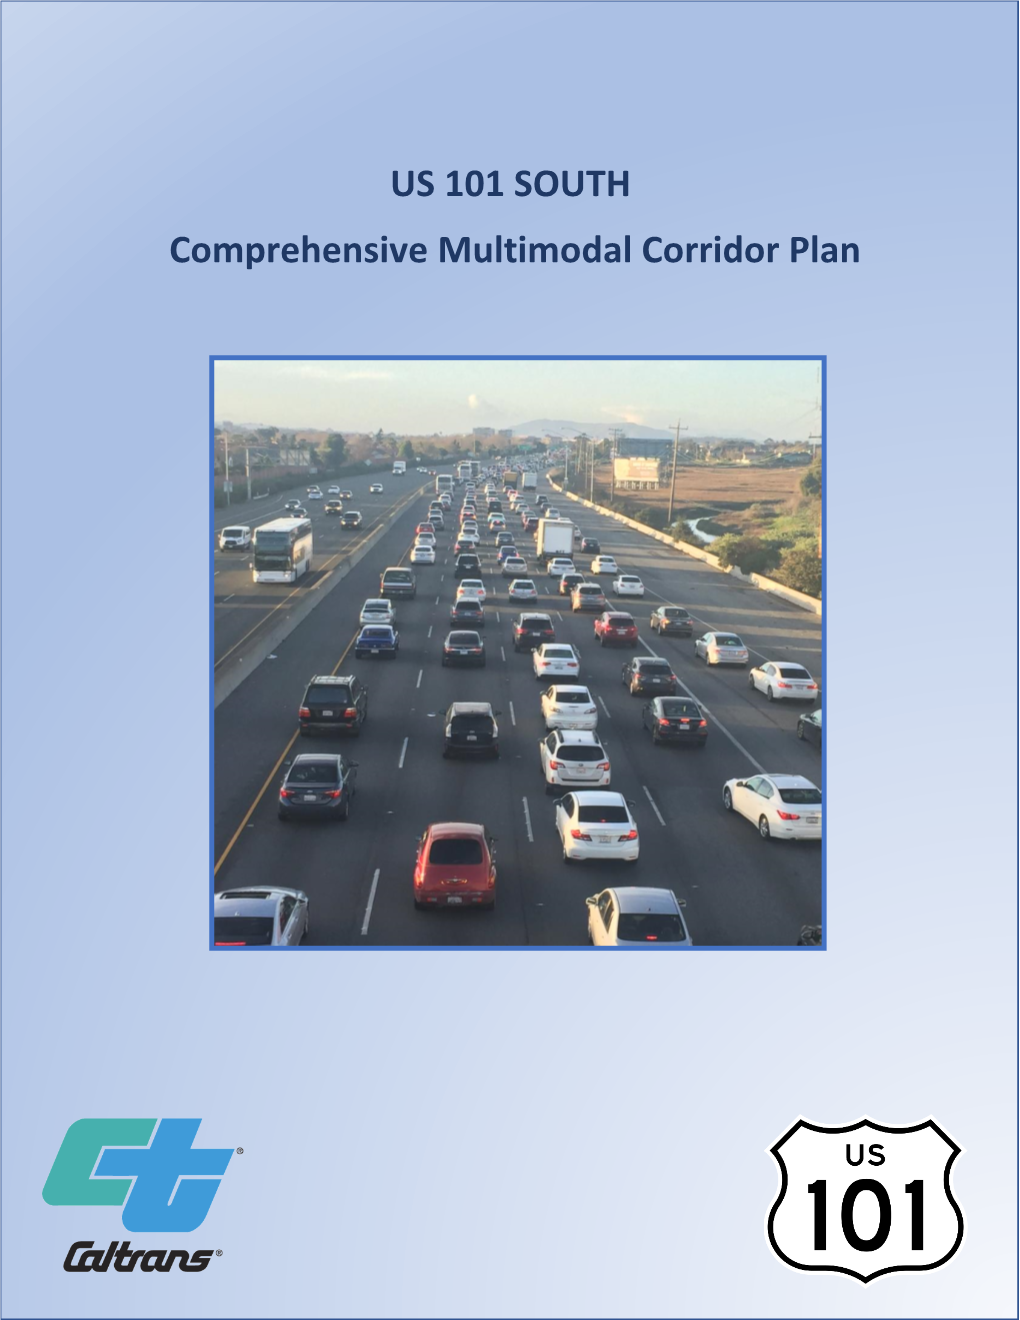 US 101 SOUTH Comprehensive Multimodal Corridor Plan